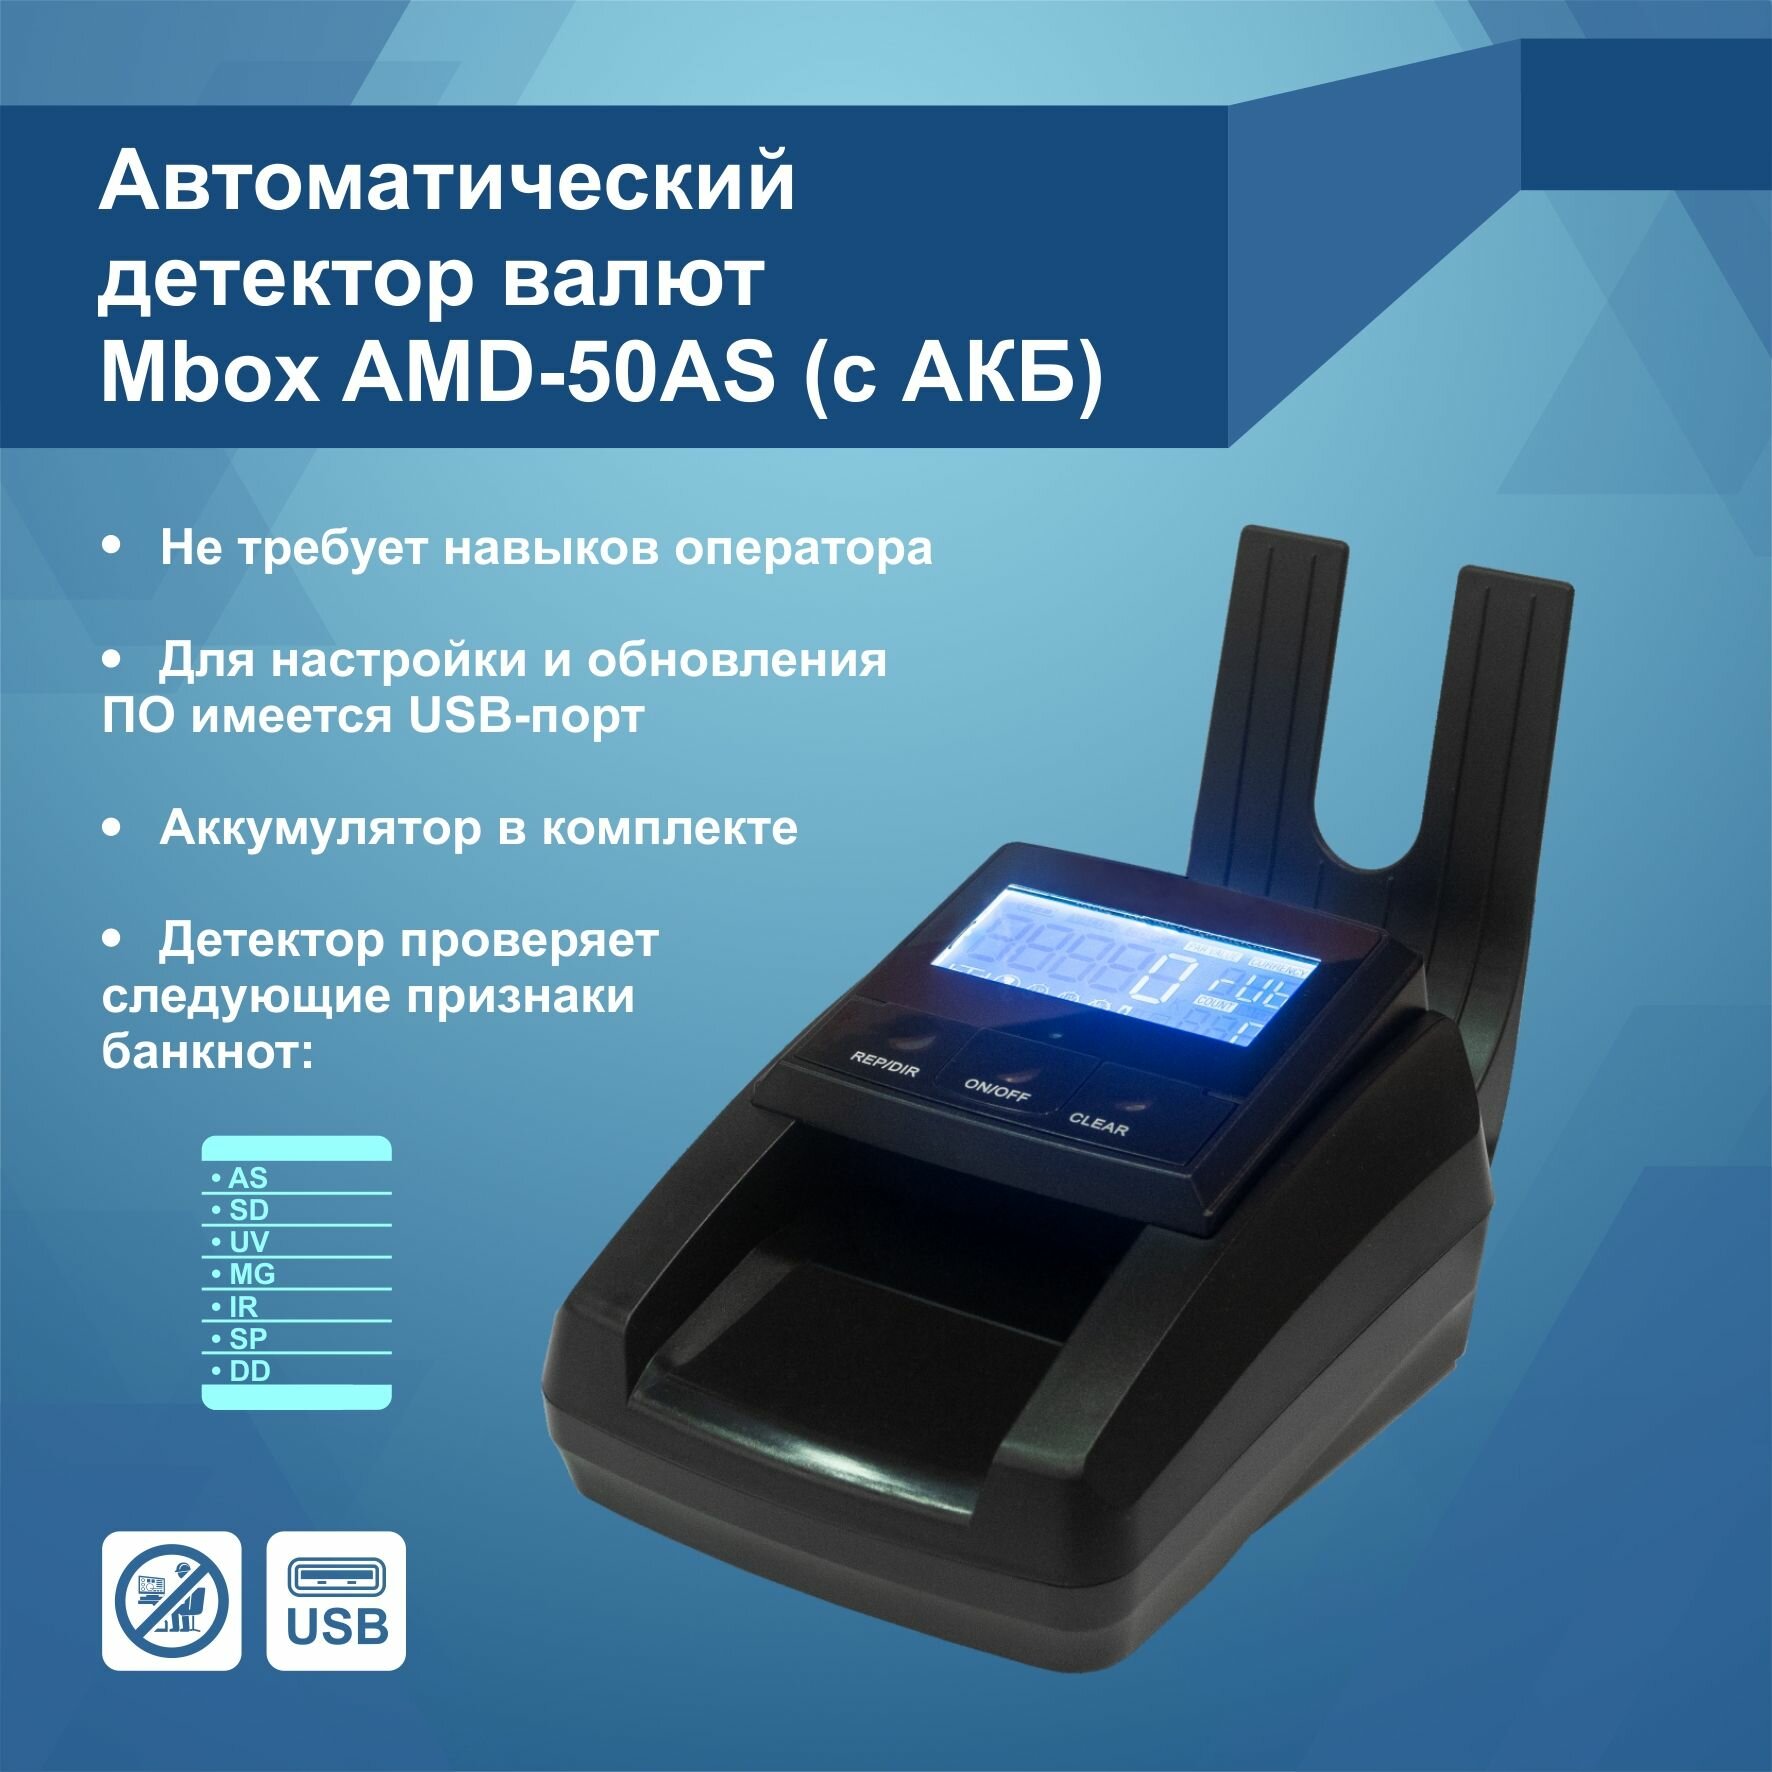 Автоматический Детектор валют Mbox AMD-50AS с аккумулятором